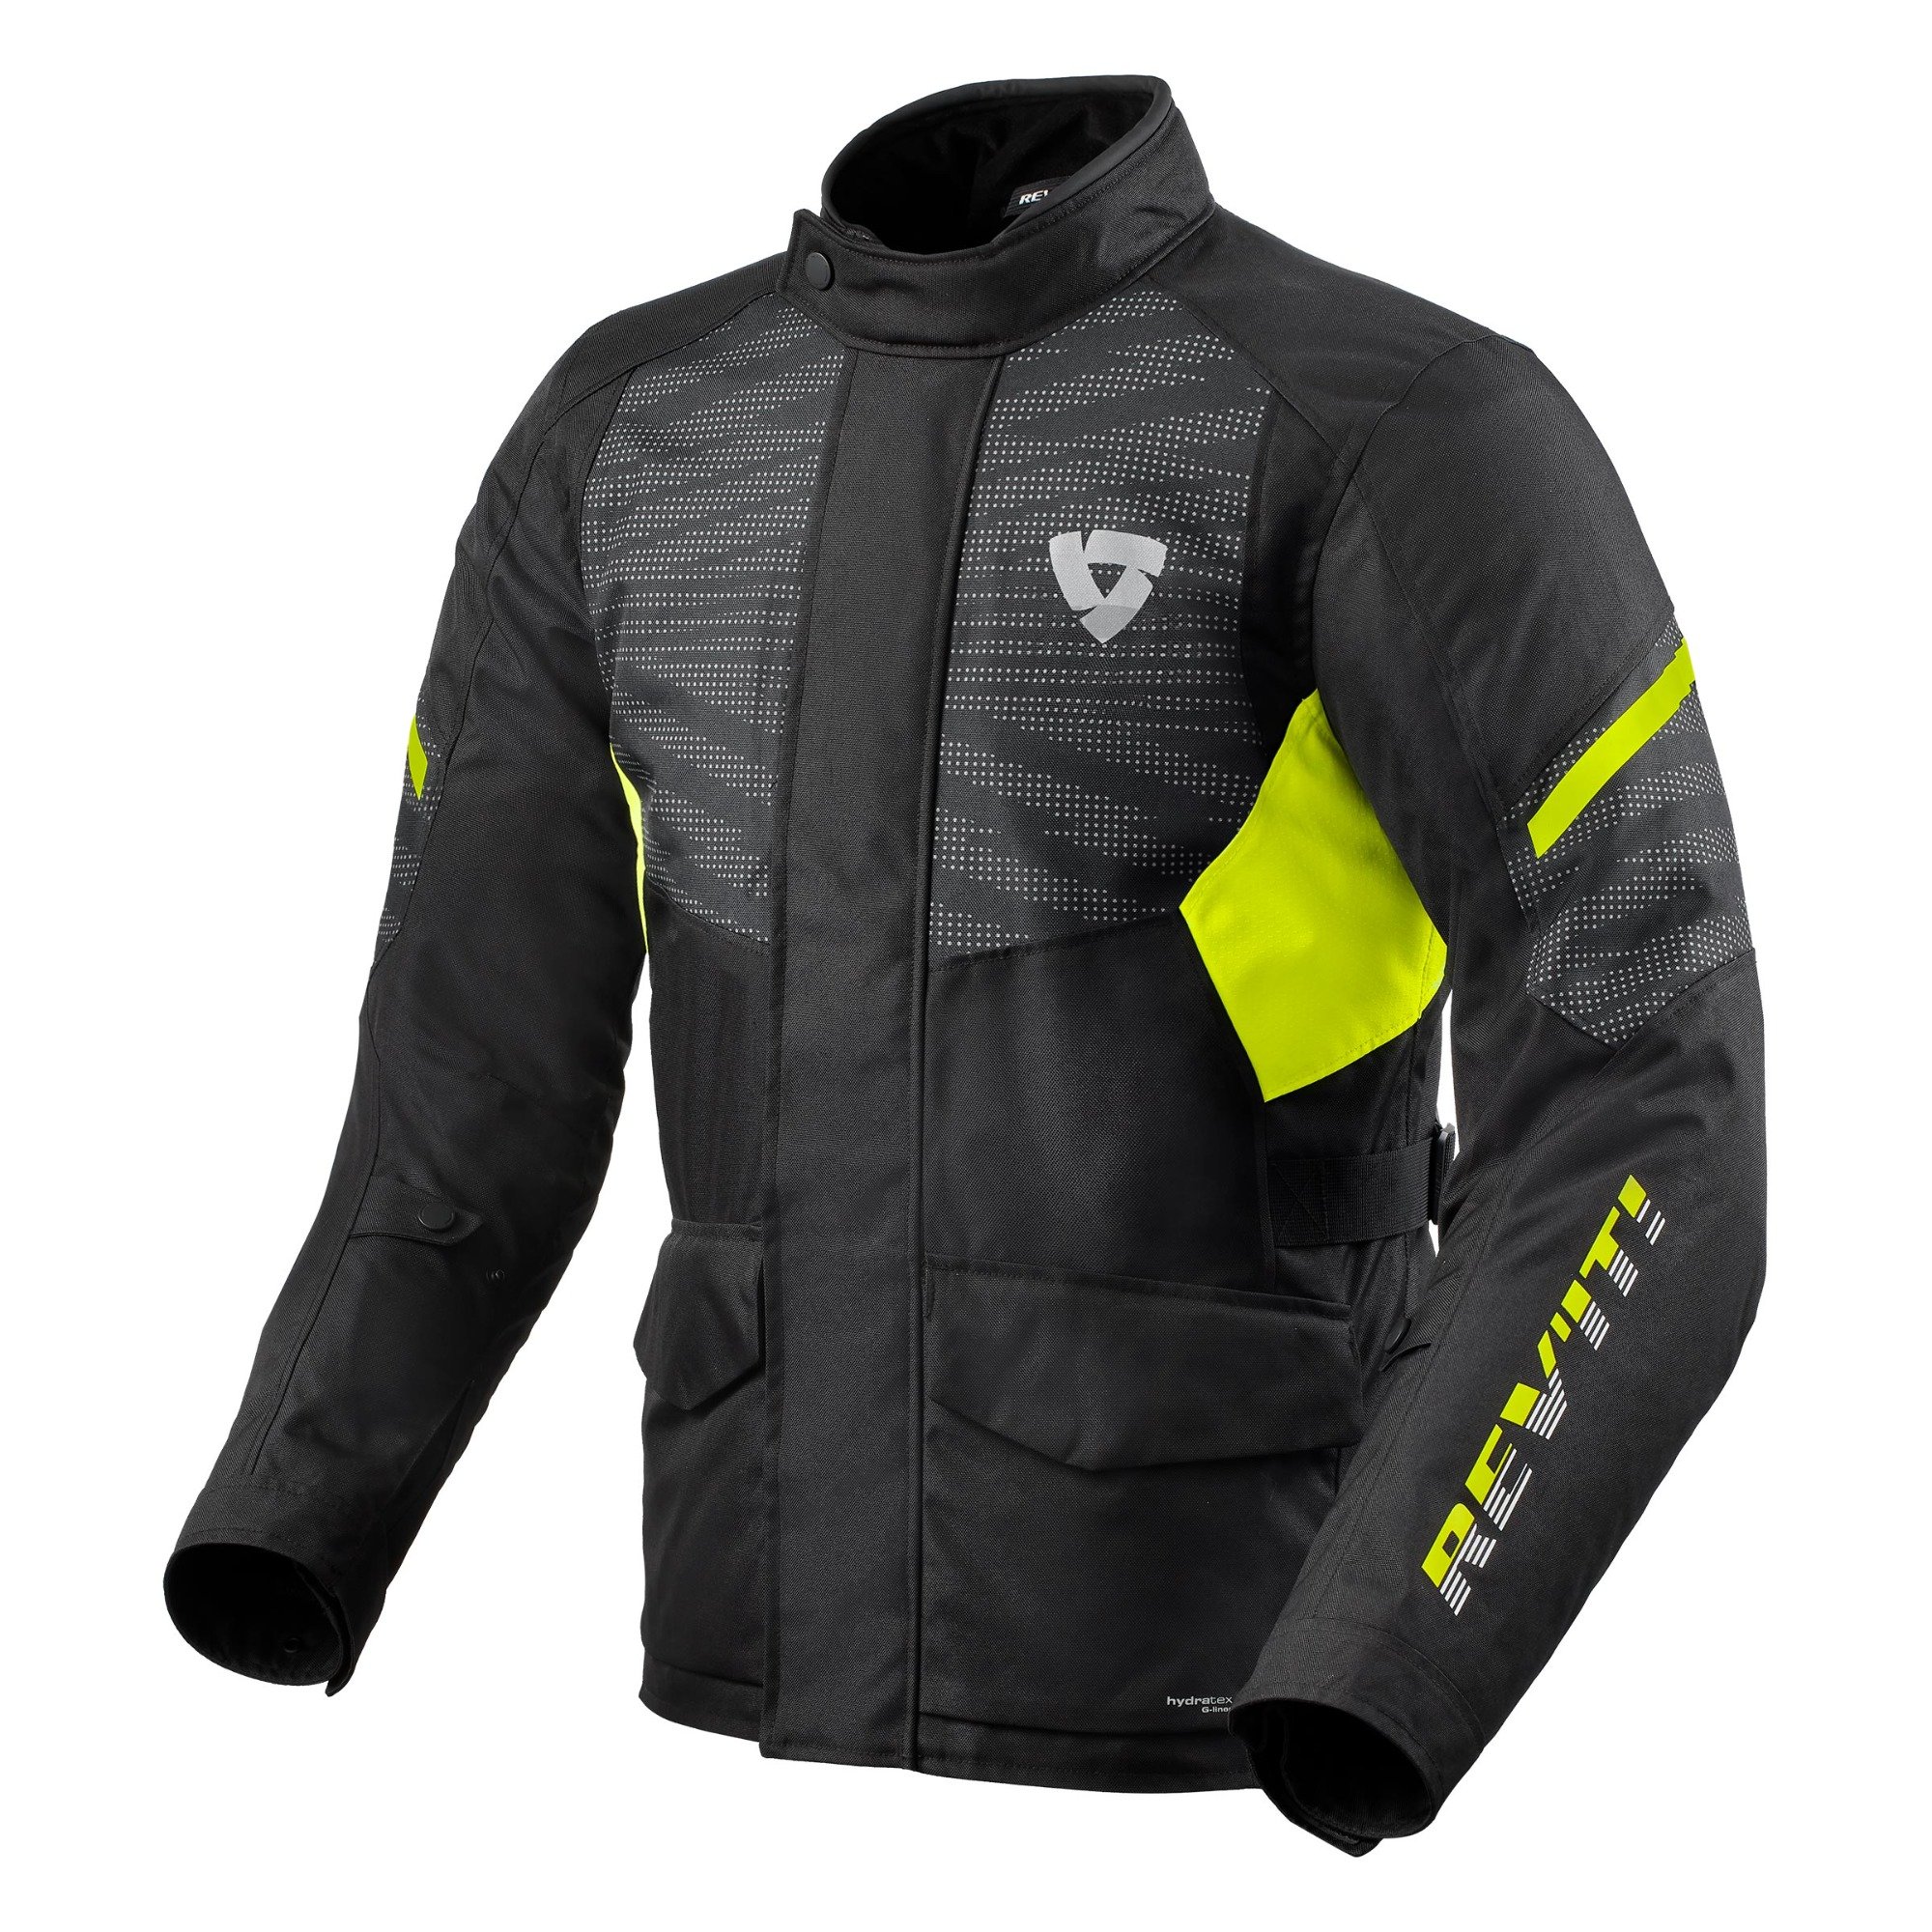 Image of REV'IT! Duke H2O Jacket Black Neon Yellow Size M ID 8700001332125